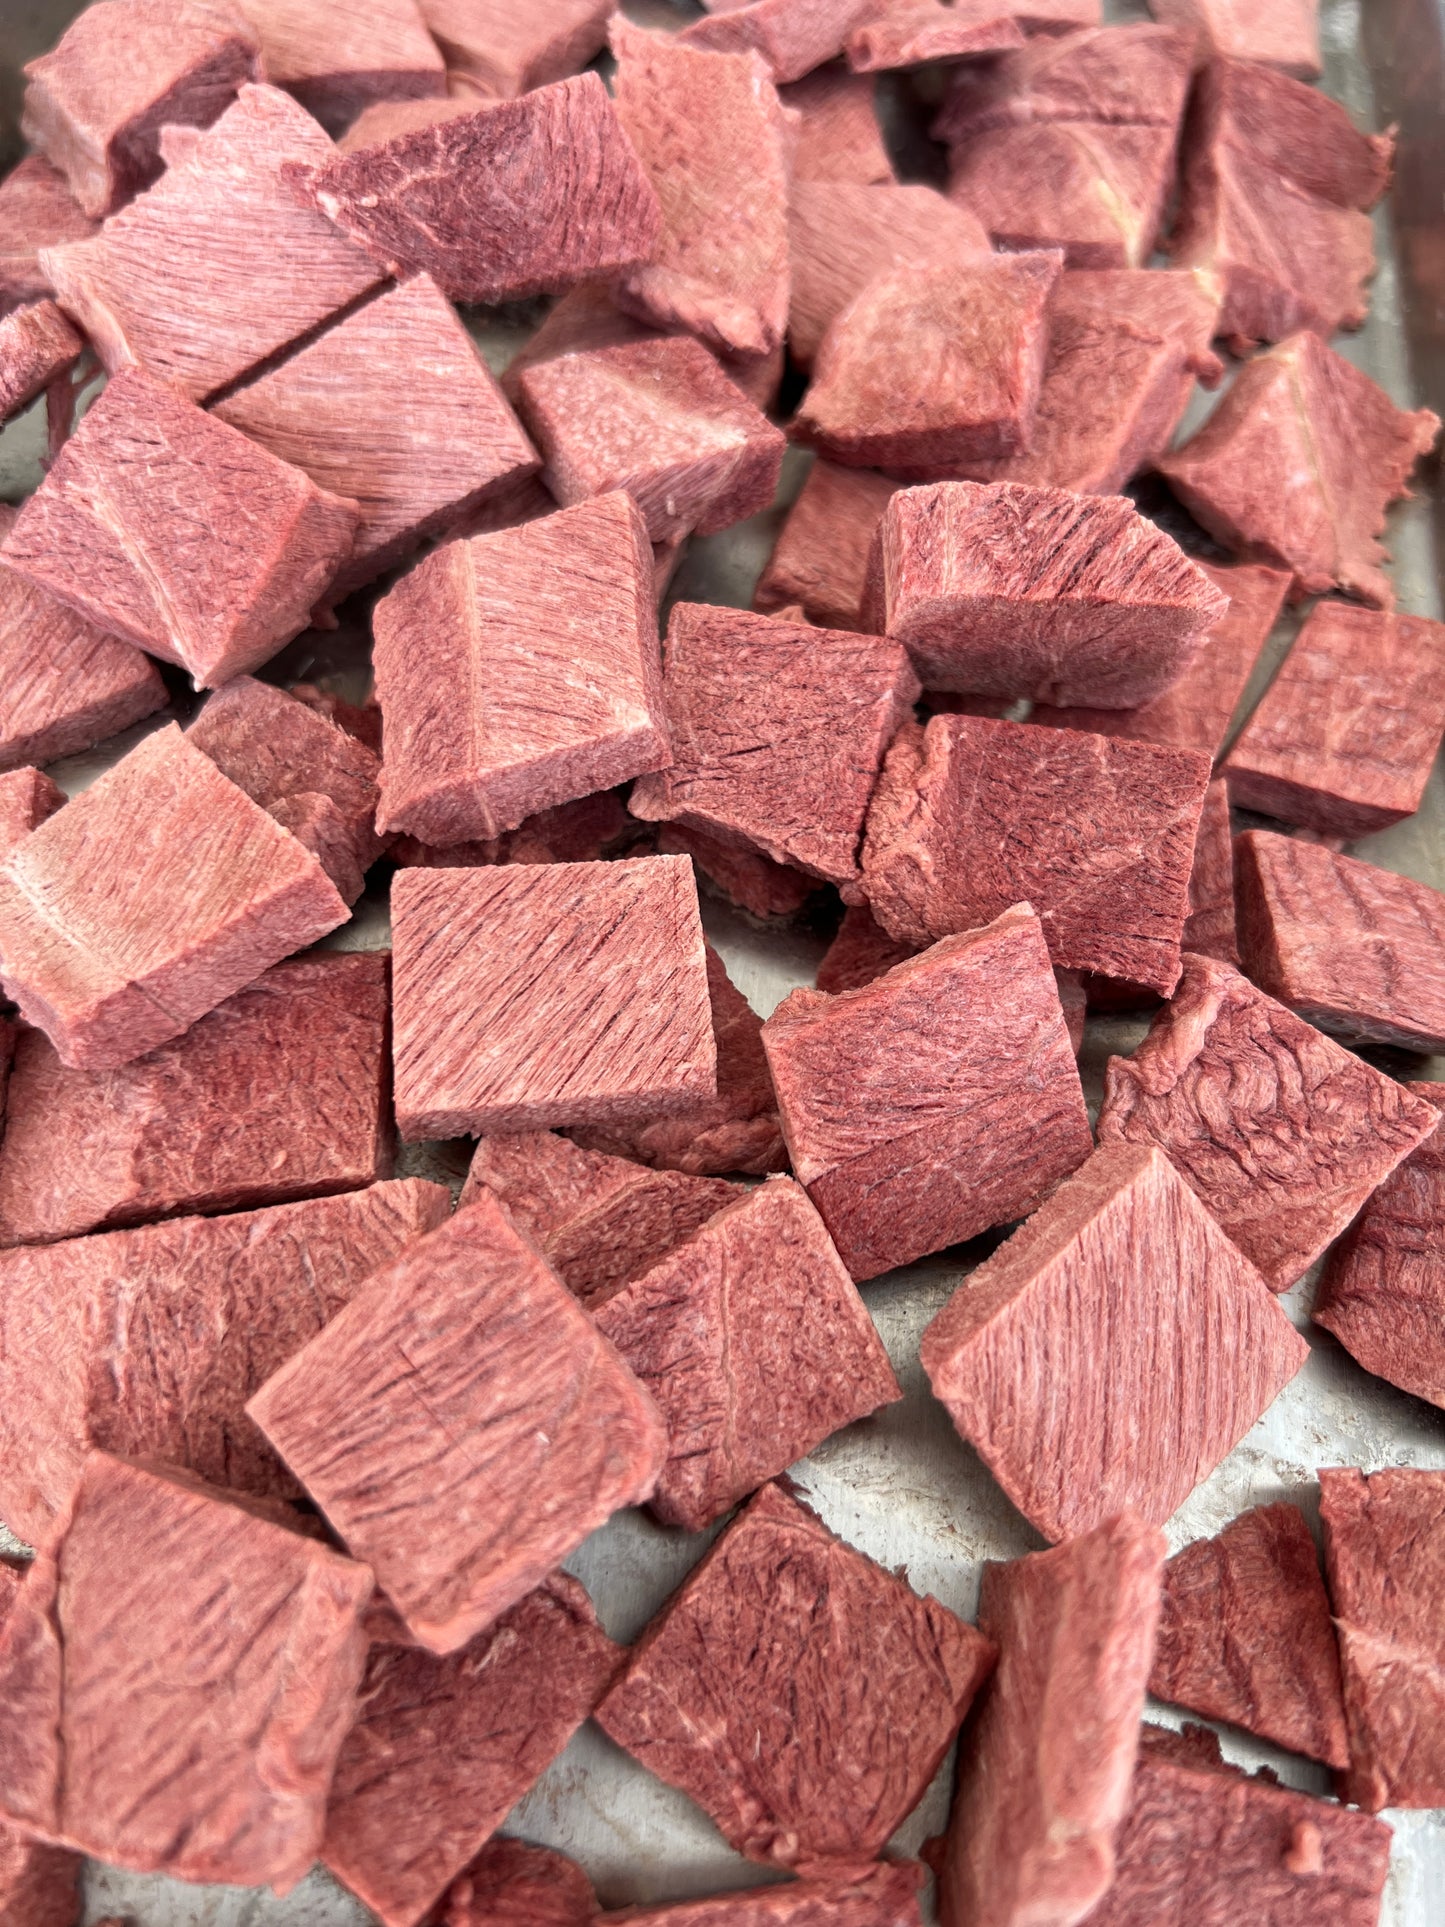 Freeze-dried Grass-fed Beef Slices 凍乾草飼牛肉片